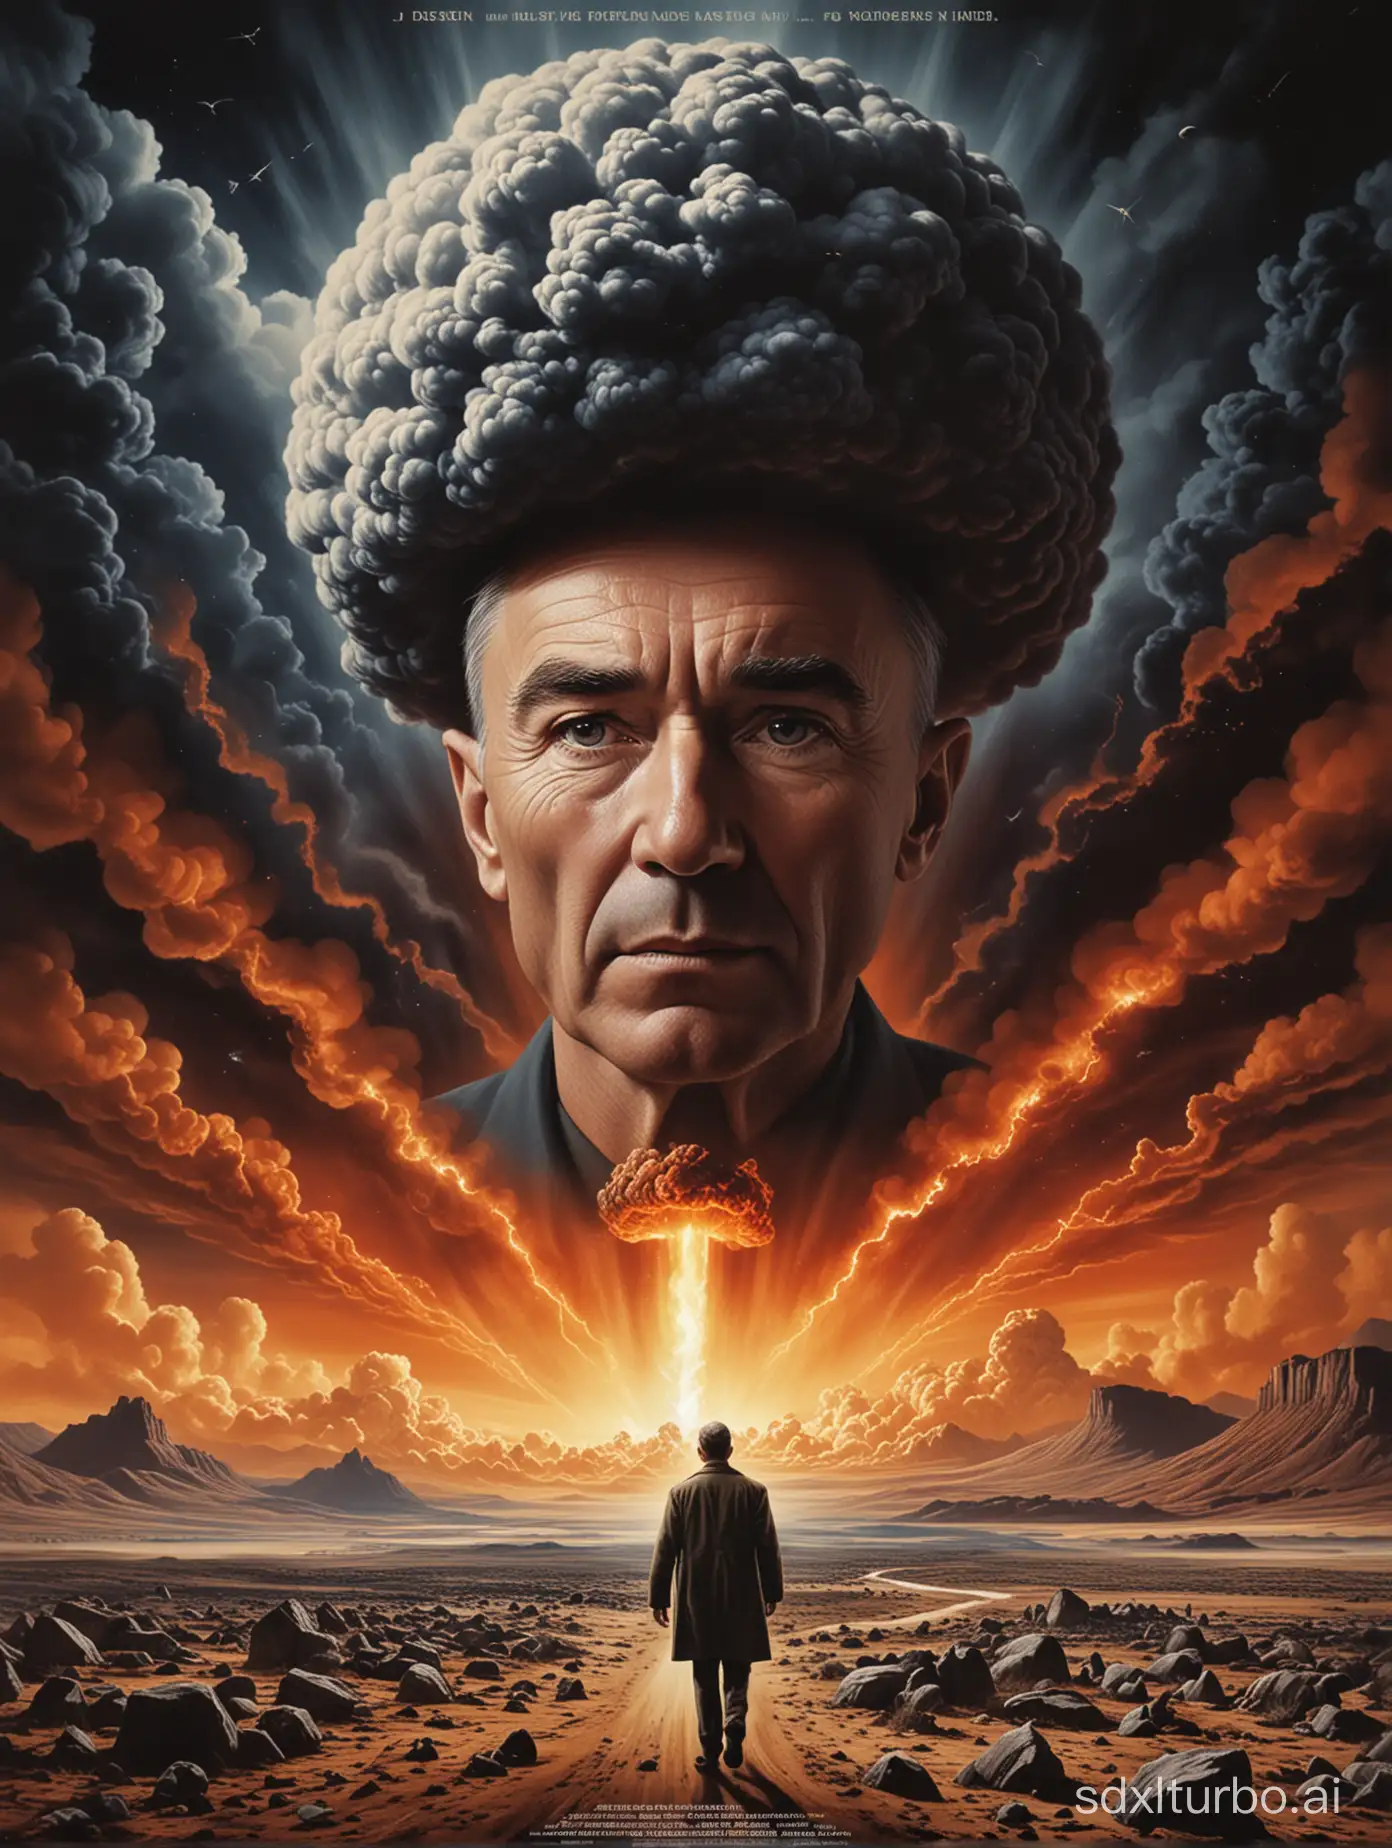 J-Robert-Oppenheimer-Portrait-with-Atomic-Explosion